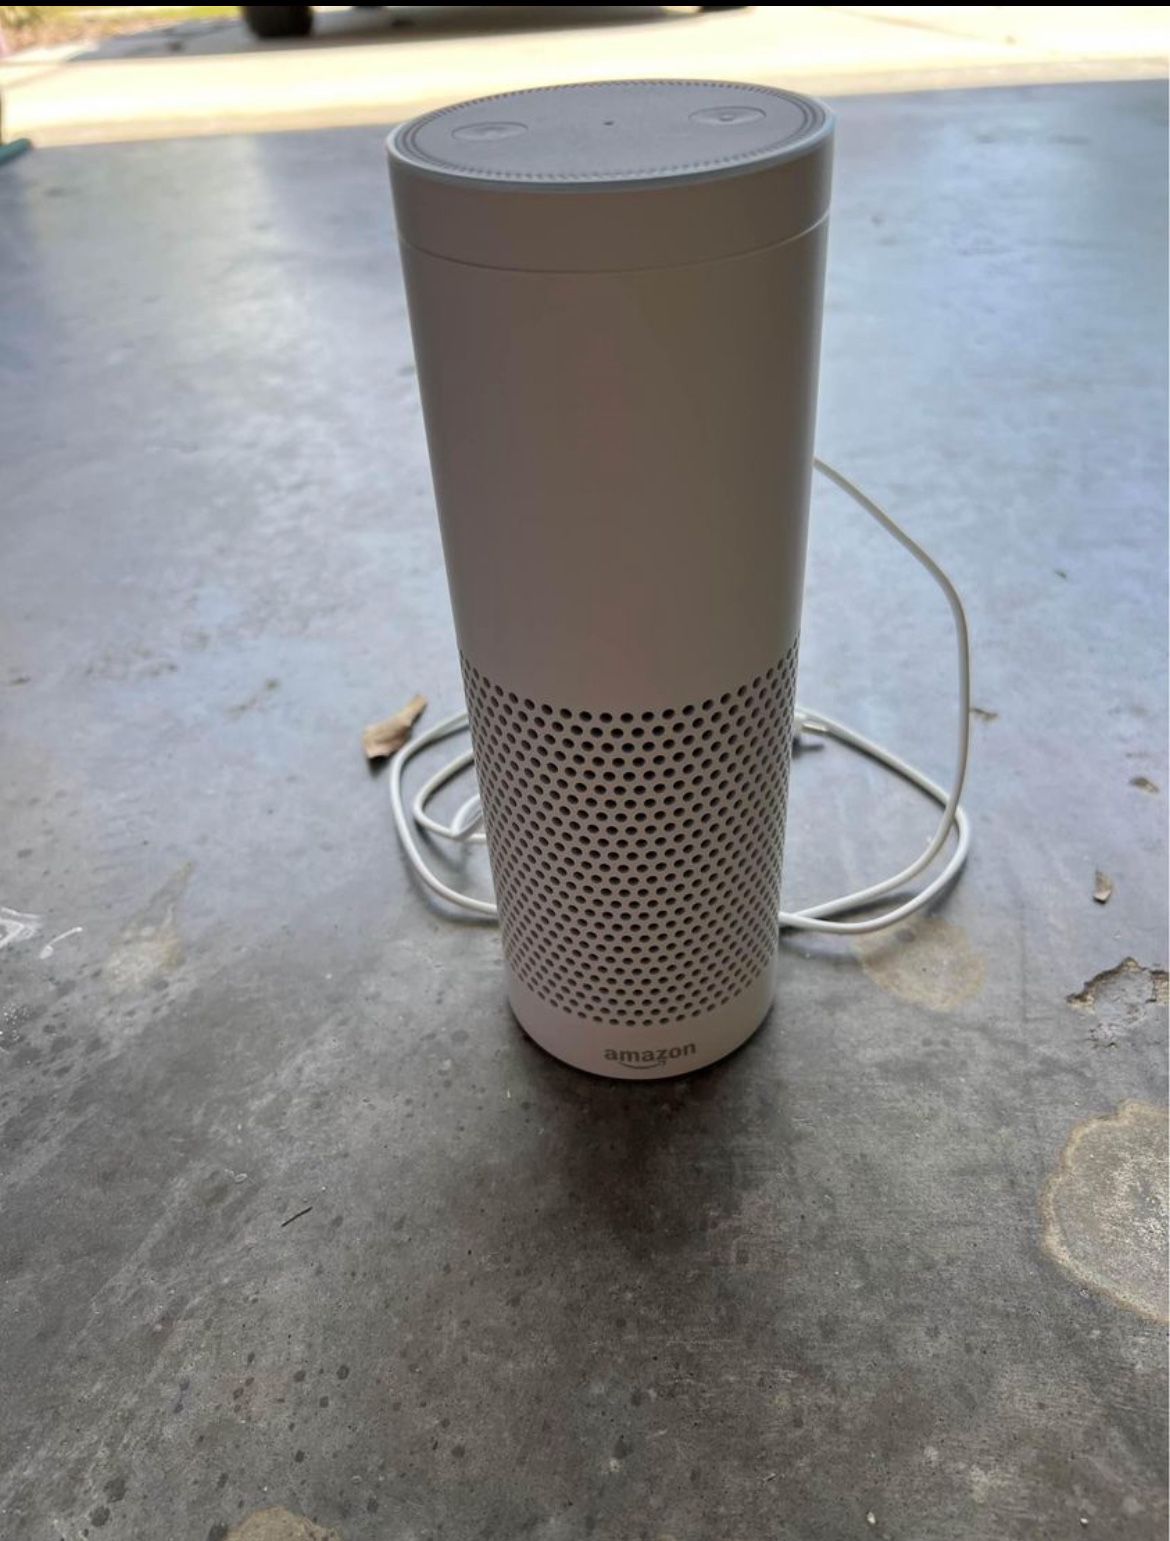 Amazon Speaker